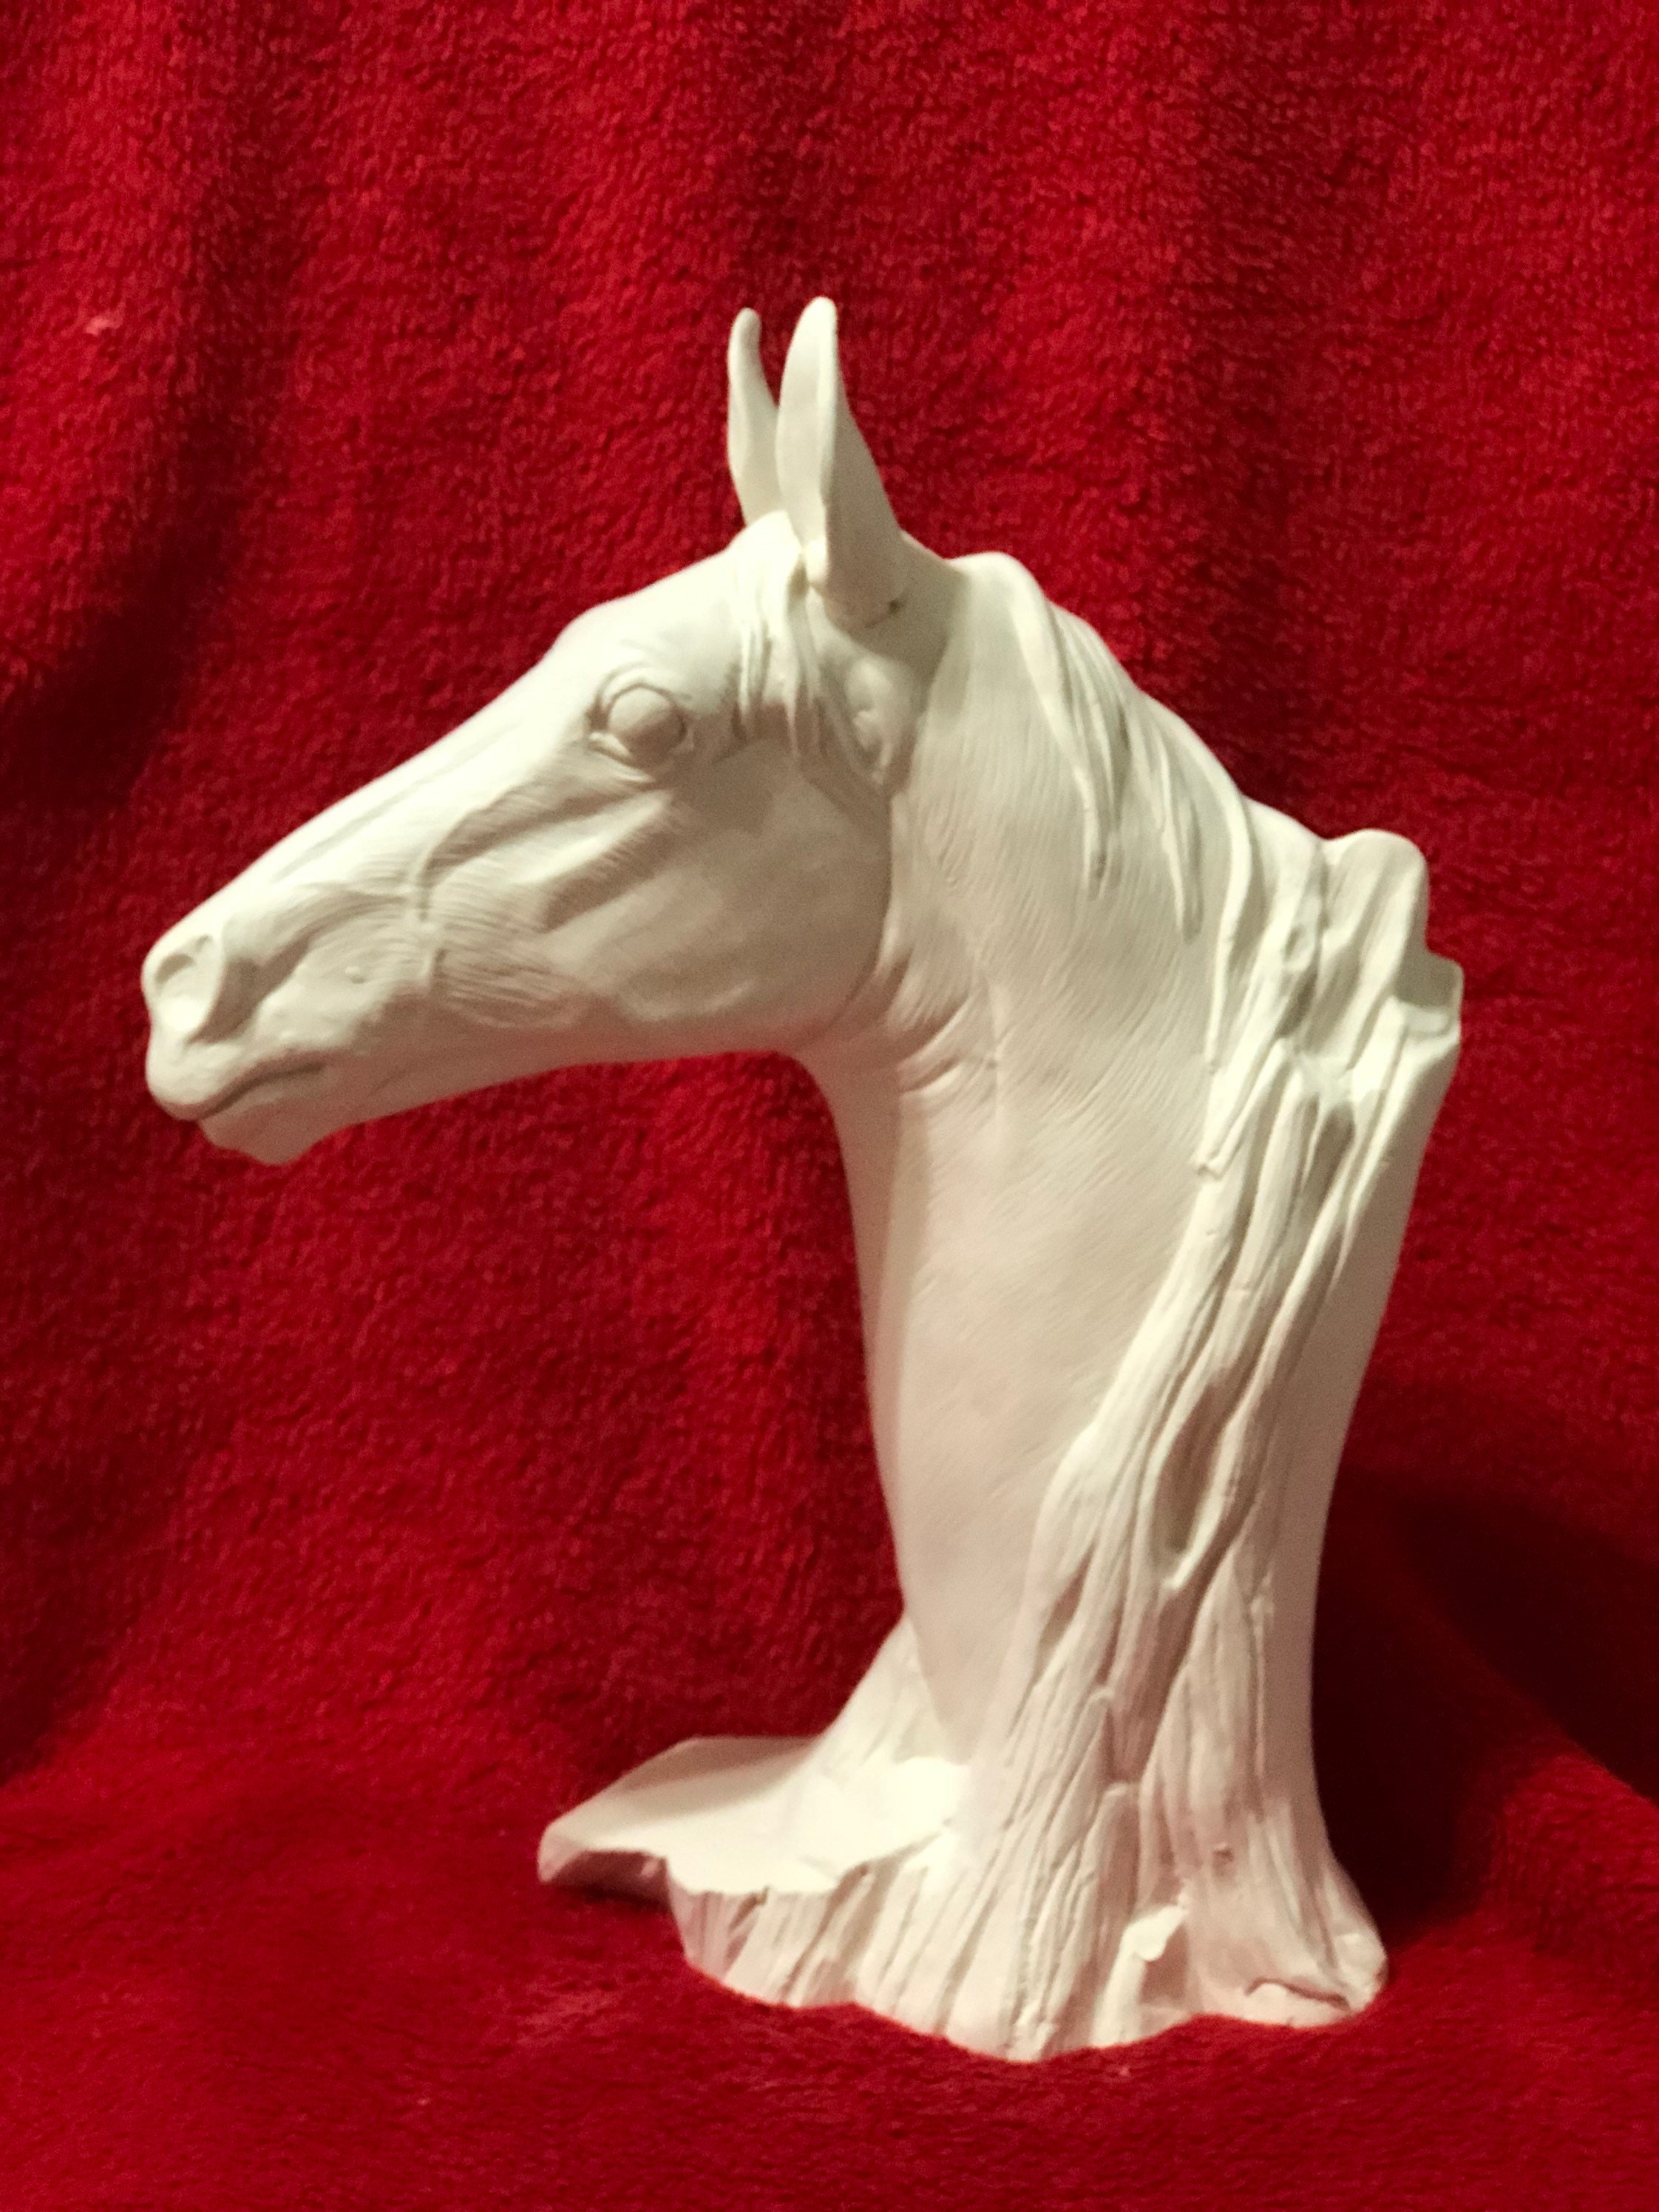 Ceramic Horse Figure, Ready to Paint, Handmade Sculpture